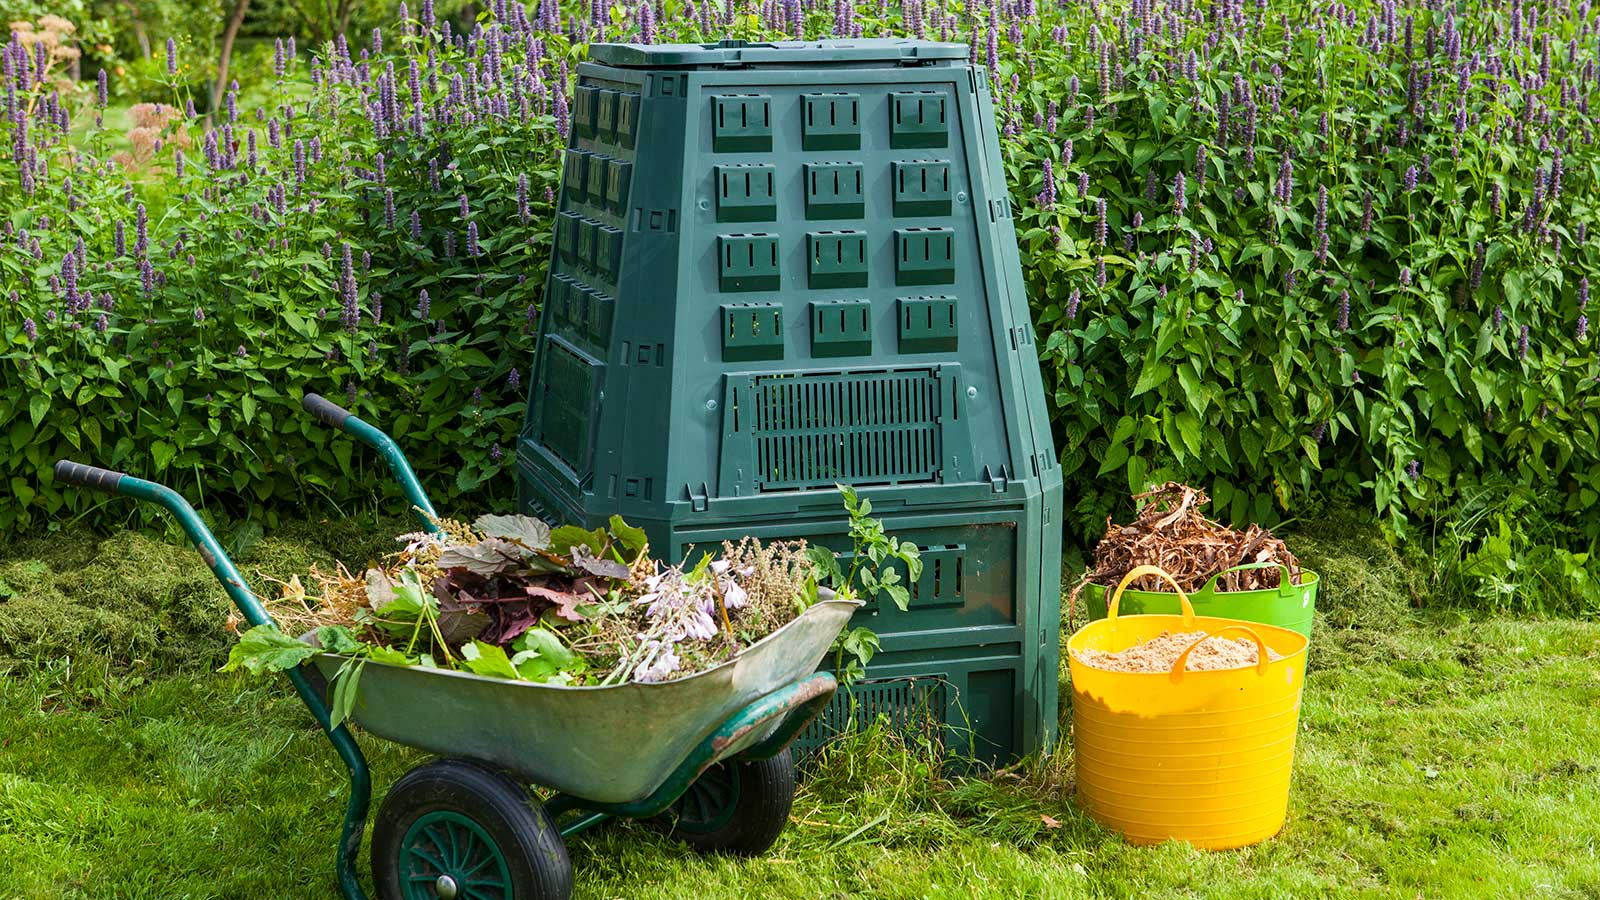 Trash bin was full so I made a DIY wheelbarrow while gardening